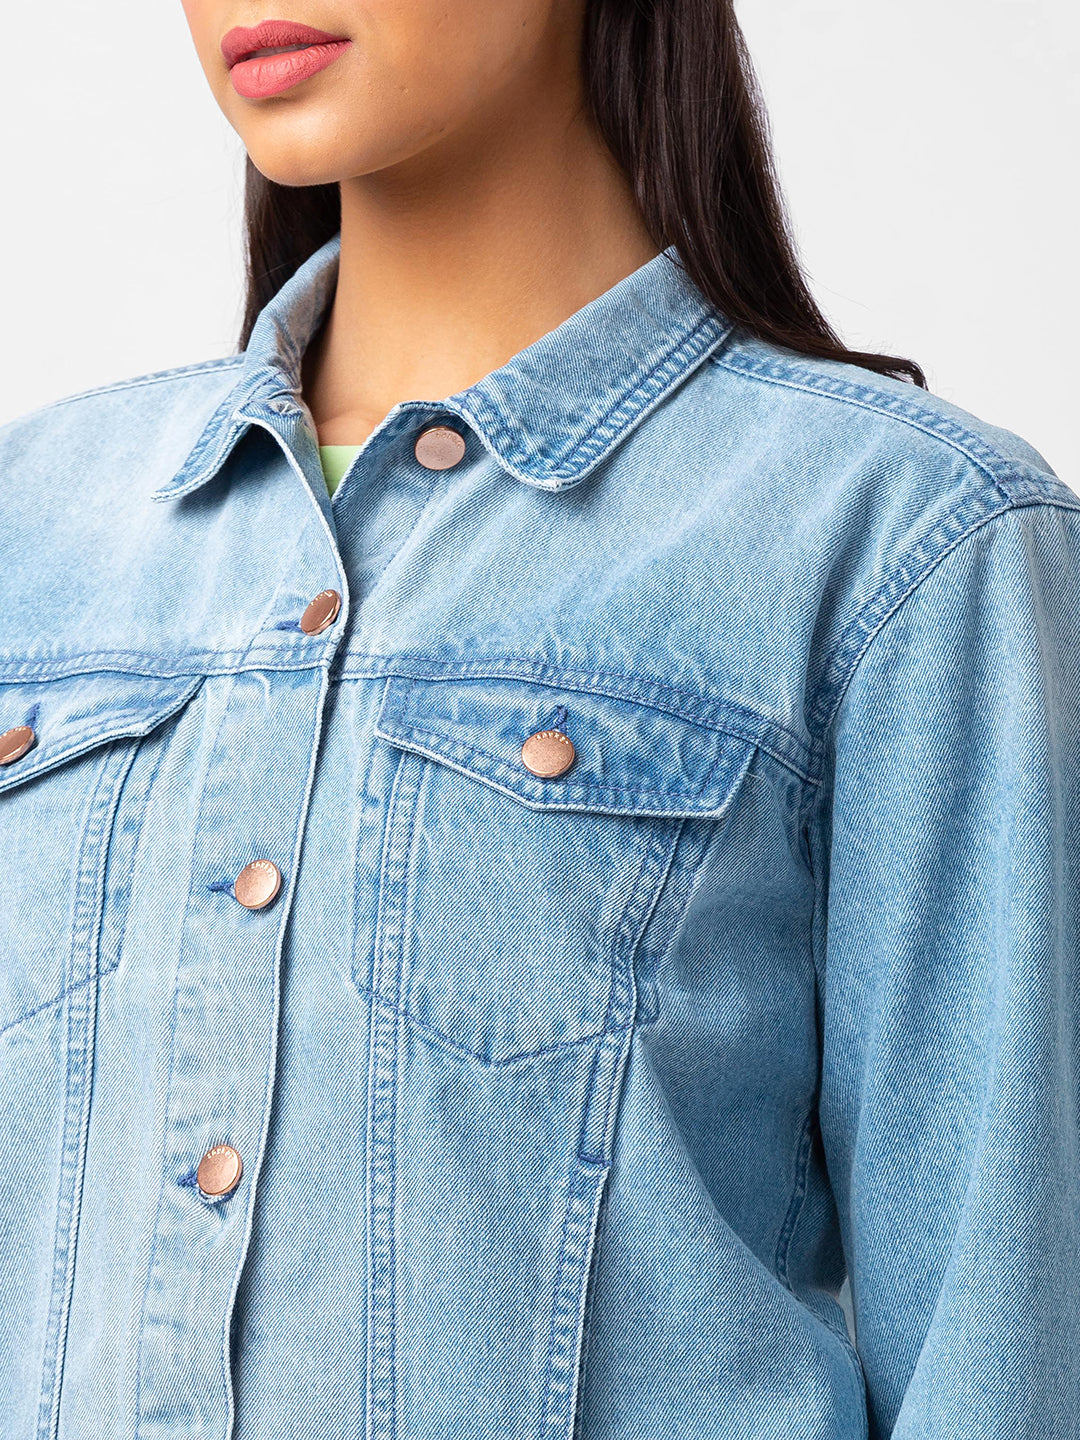 Spykar Mid Blue Cotton Full Sleeve Denim Shirt For Women - wsh02bb001midblue